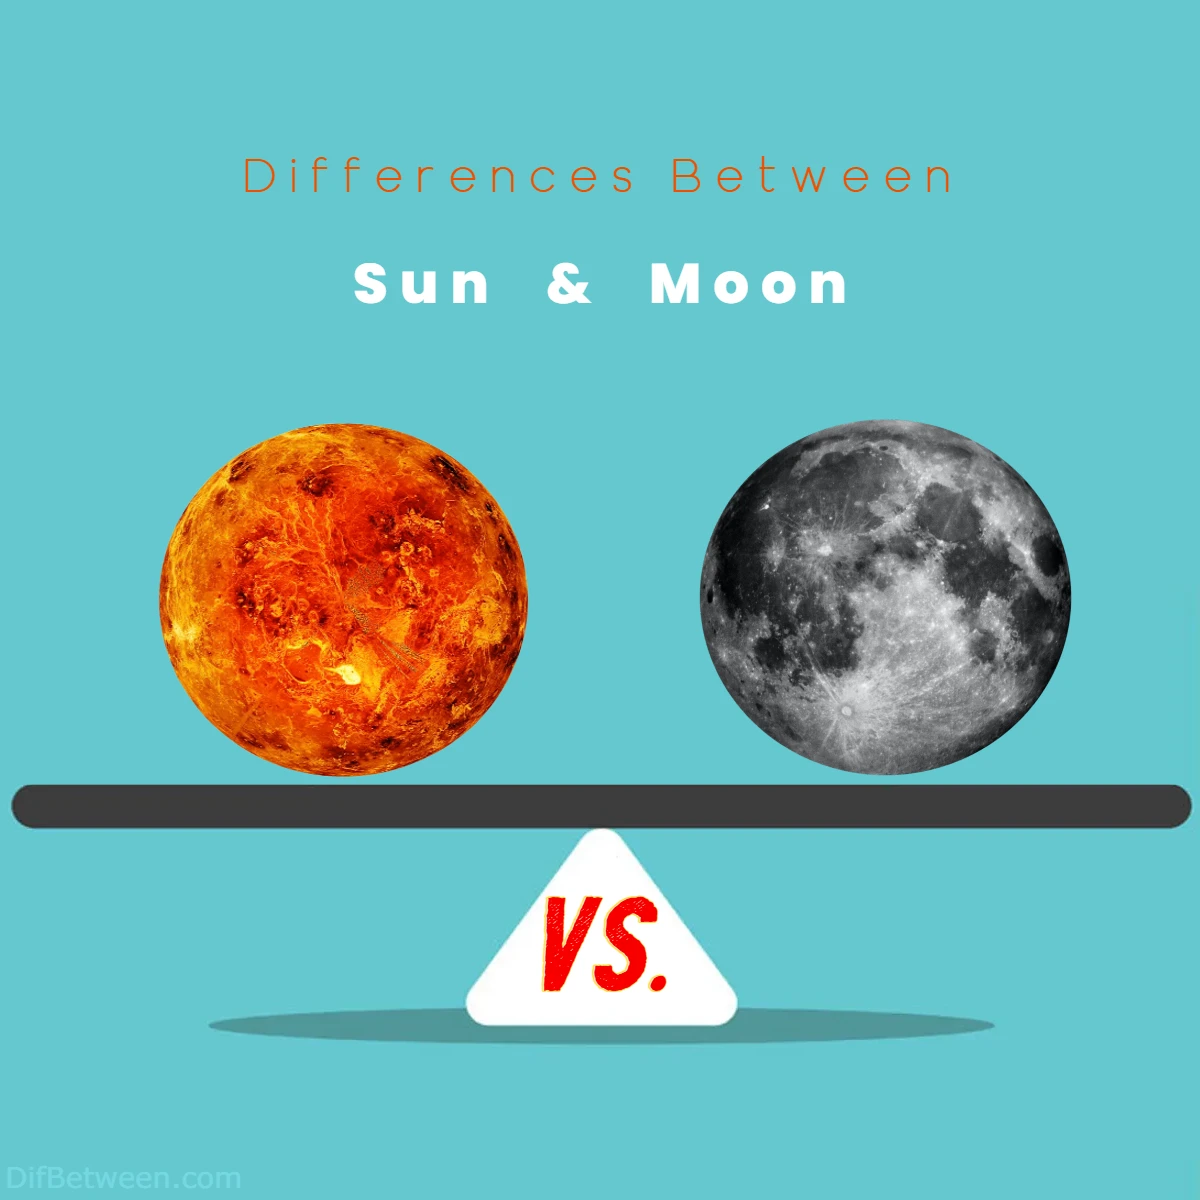 Differences Between Sun vs Moon